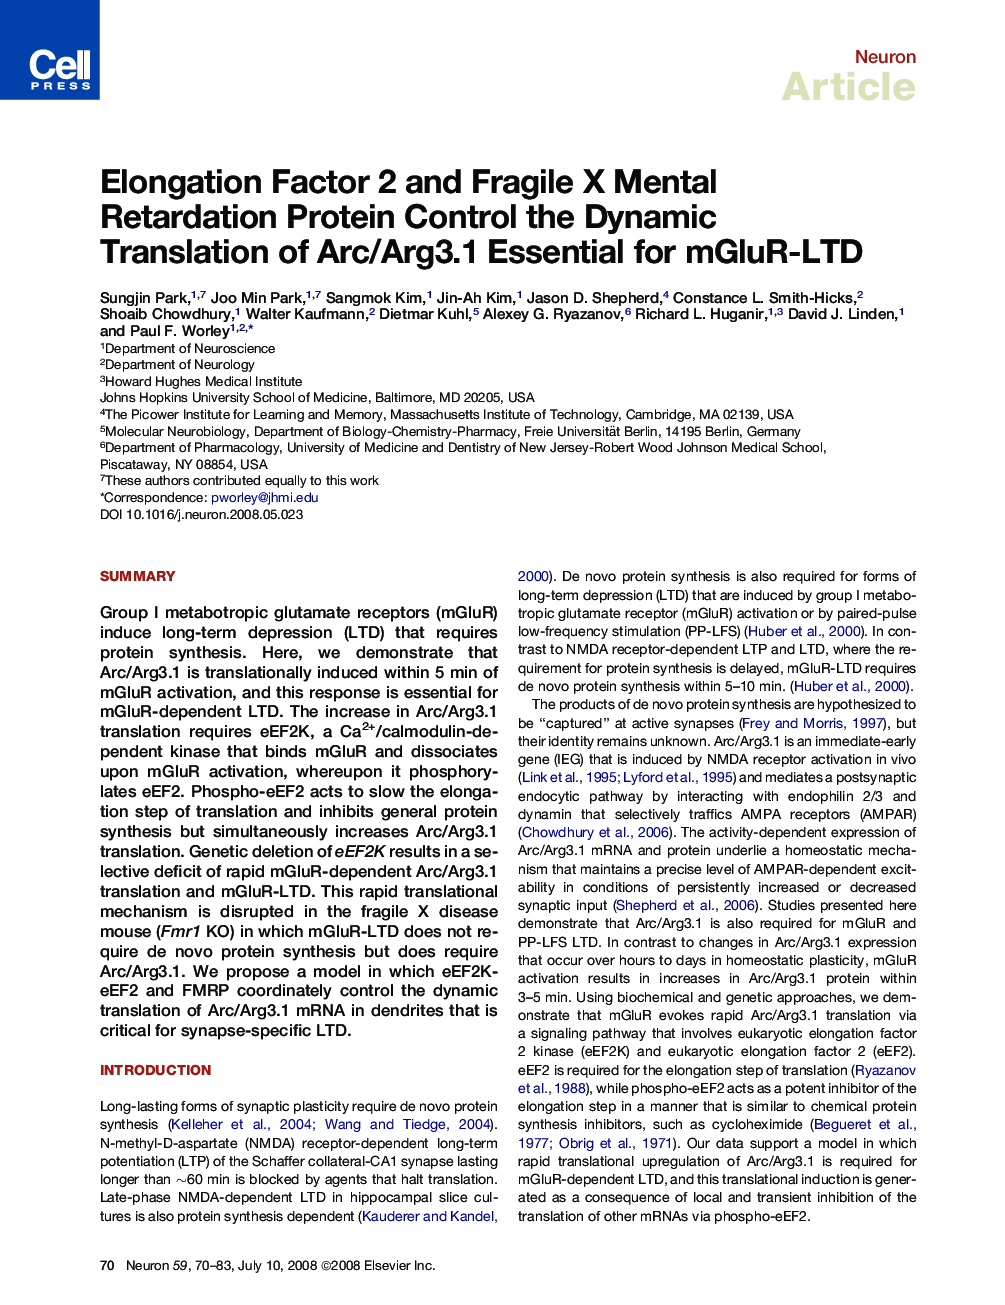 Elongation Factor 2 and Fragile X Mental Retardation Protein Control the Dynamic Translation of Arc/Arg3.1 Essential for mGluR-LTD